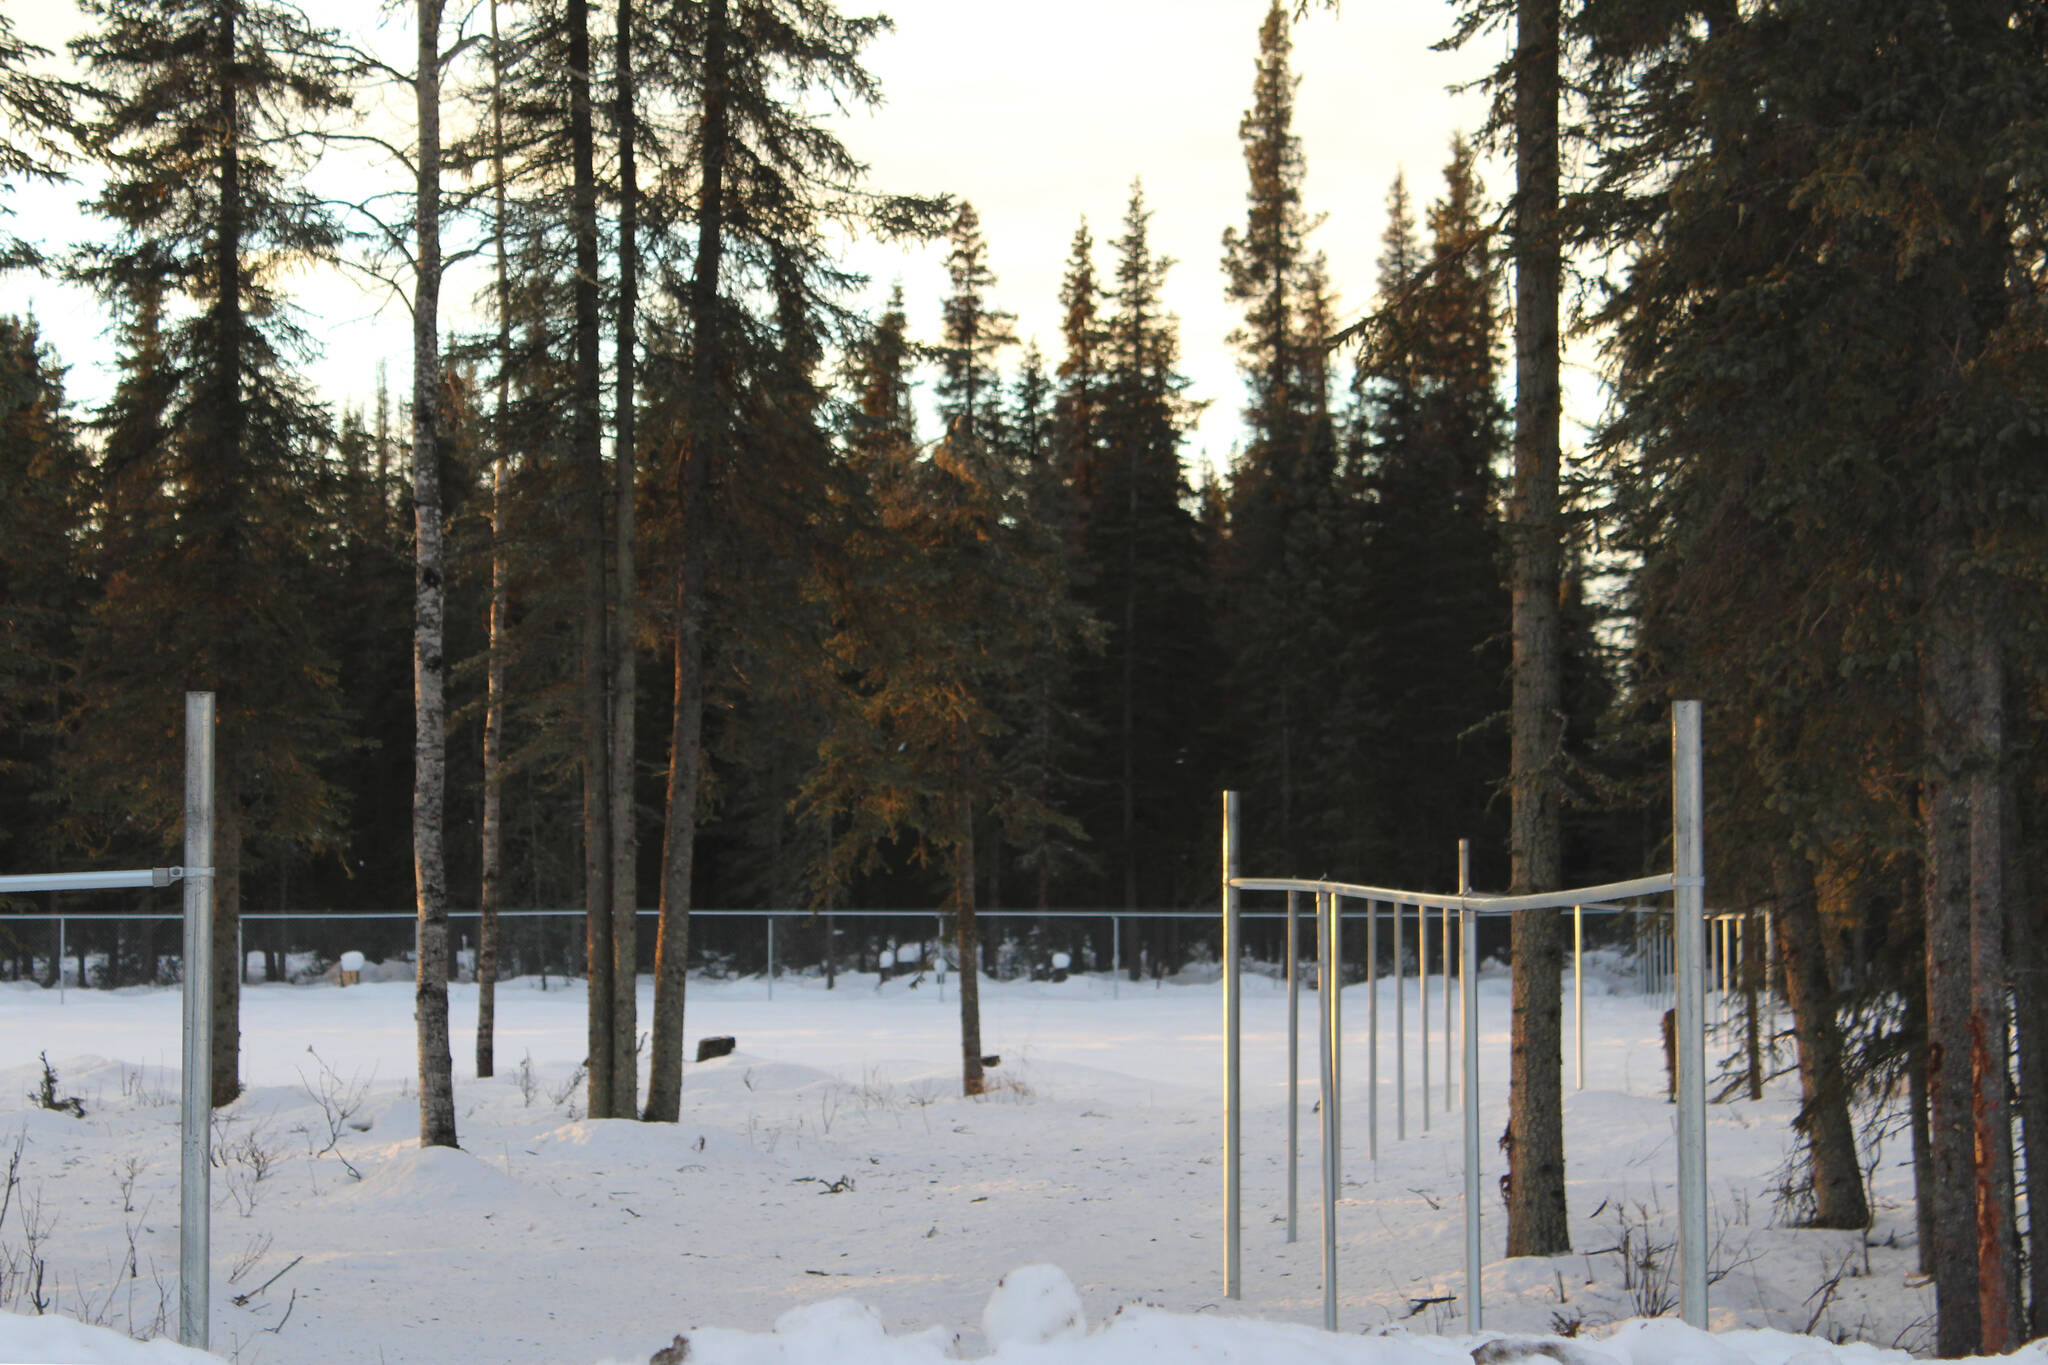 Fencing marks the boundaries of a planned dog park near Daubenspeck Park on Monday, Dec. 27, 2021 in Kenai, Alaska. (Ashlyn O’Hara/Peninsula Clarion)